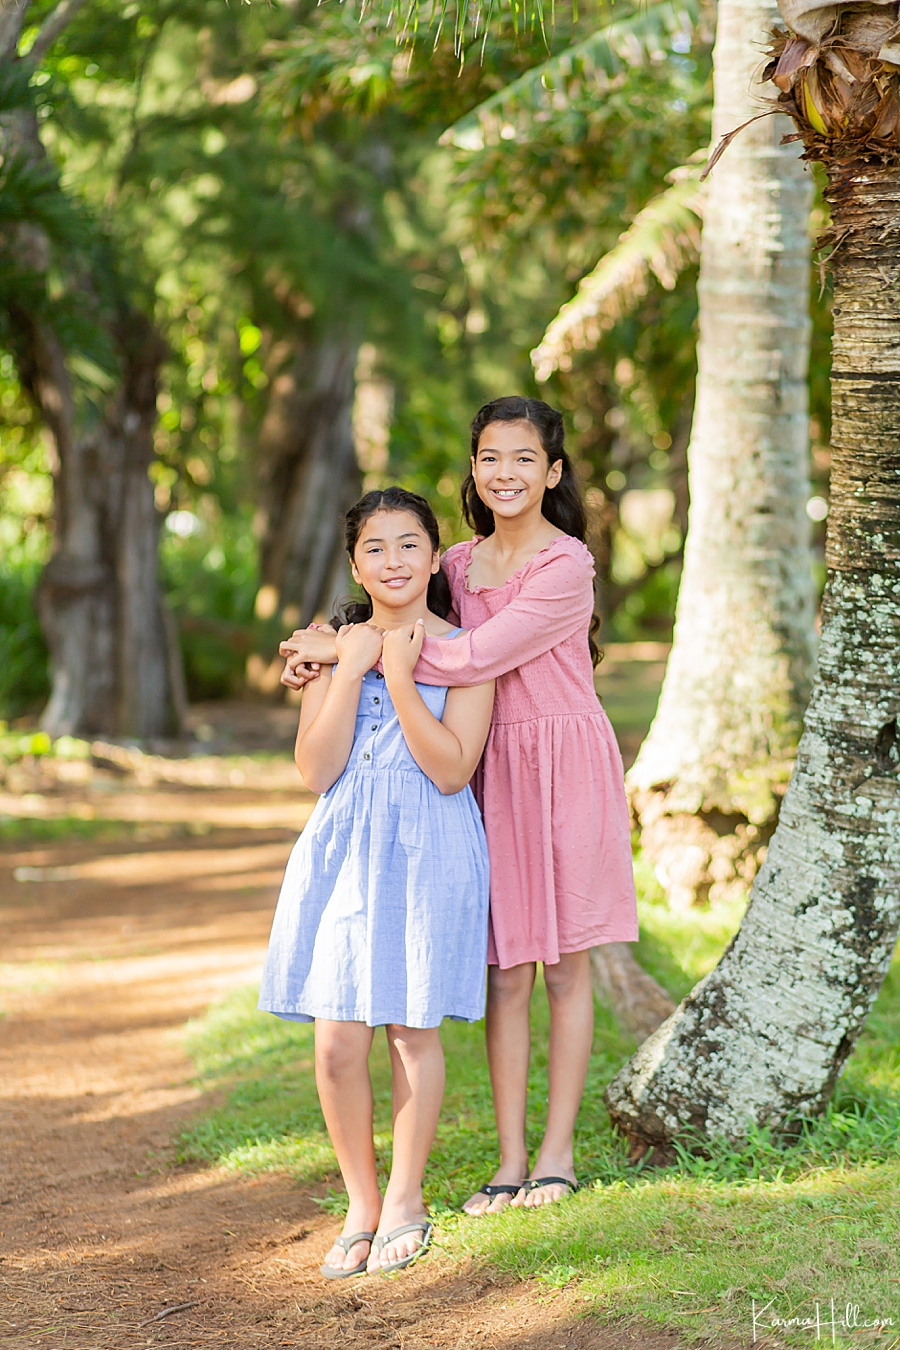 family photographers in Maui, Hawaii
